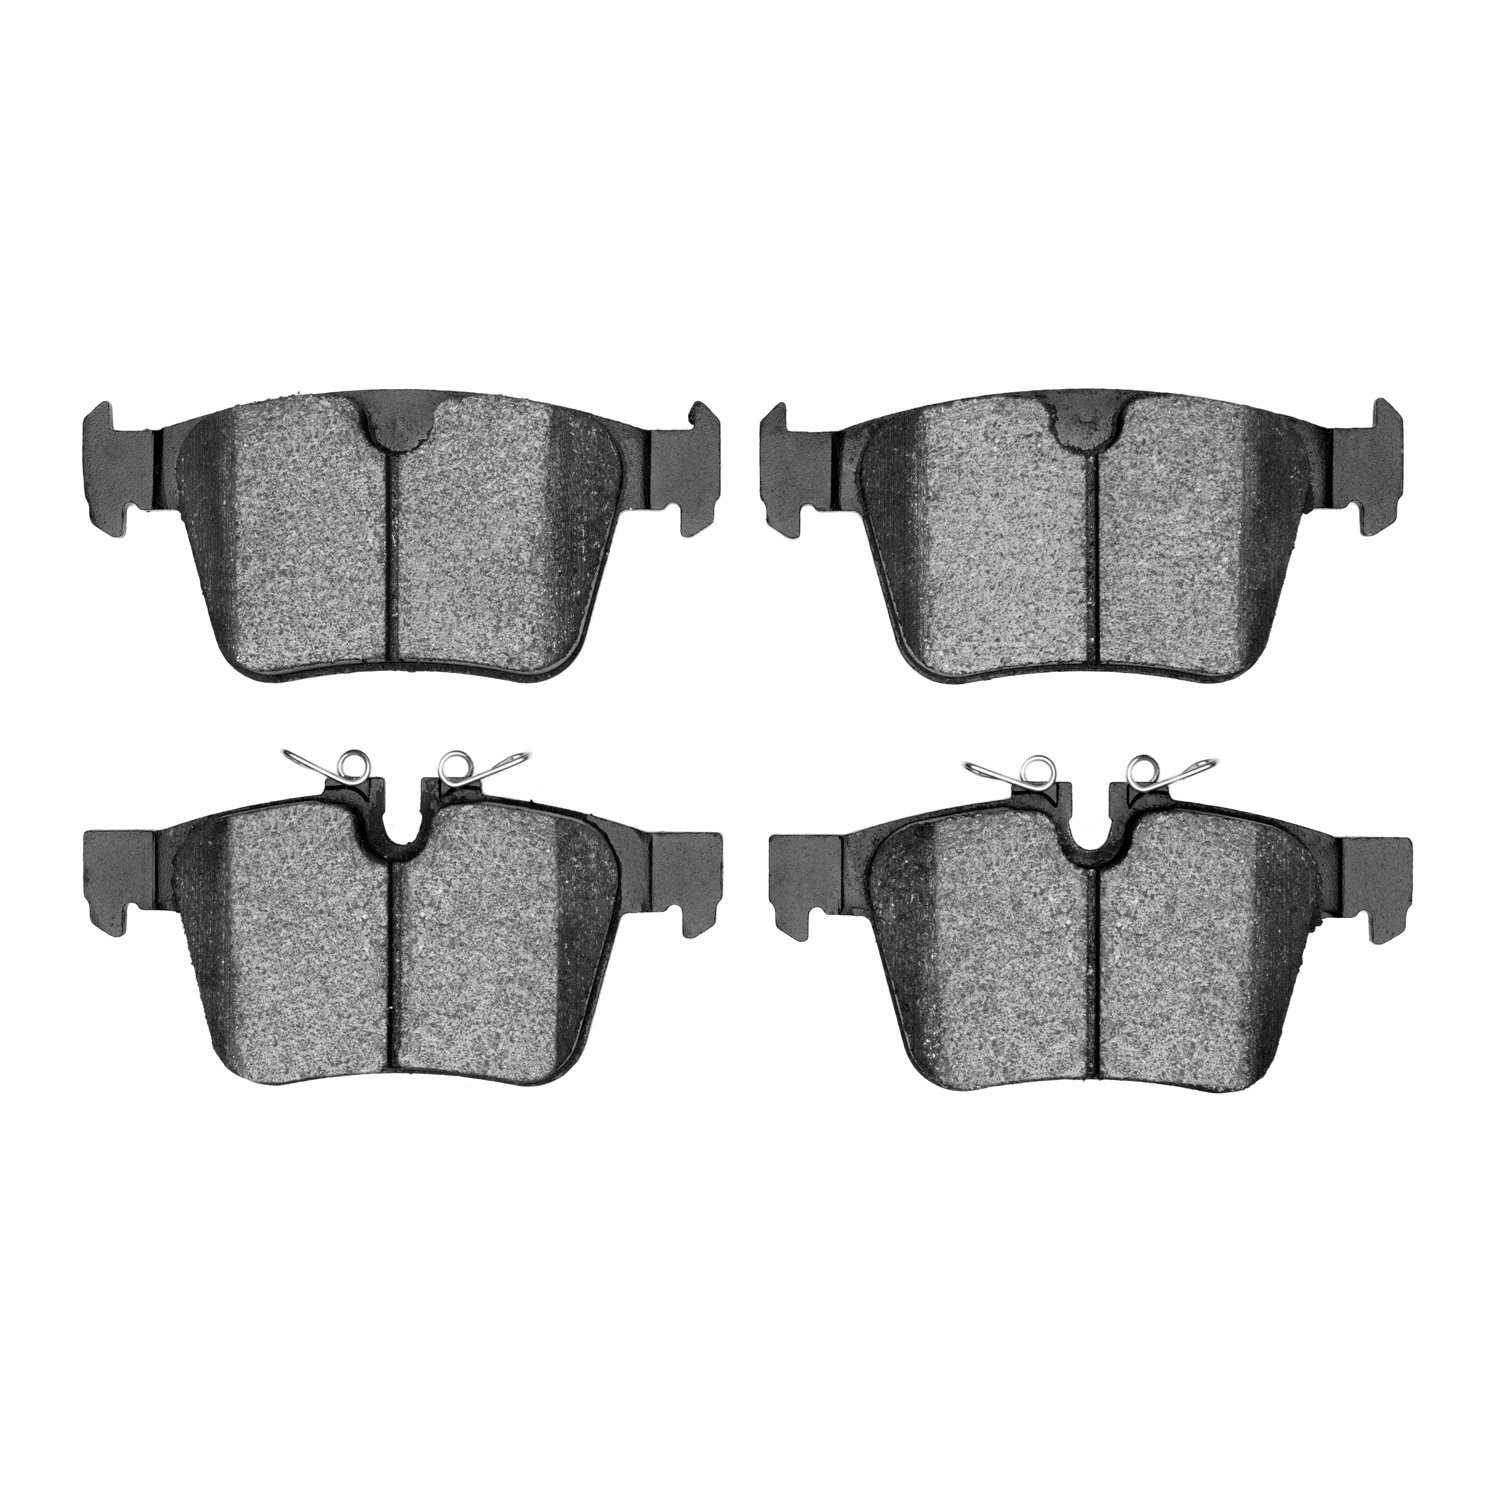 1551-1821-00 5000 Advanced Ceramic Brake Pads, Fits Select Multiple Makes/Models, Position: Rear